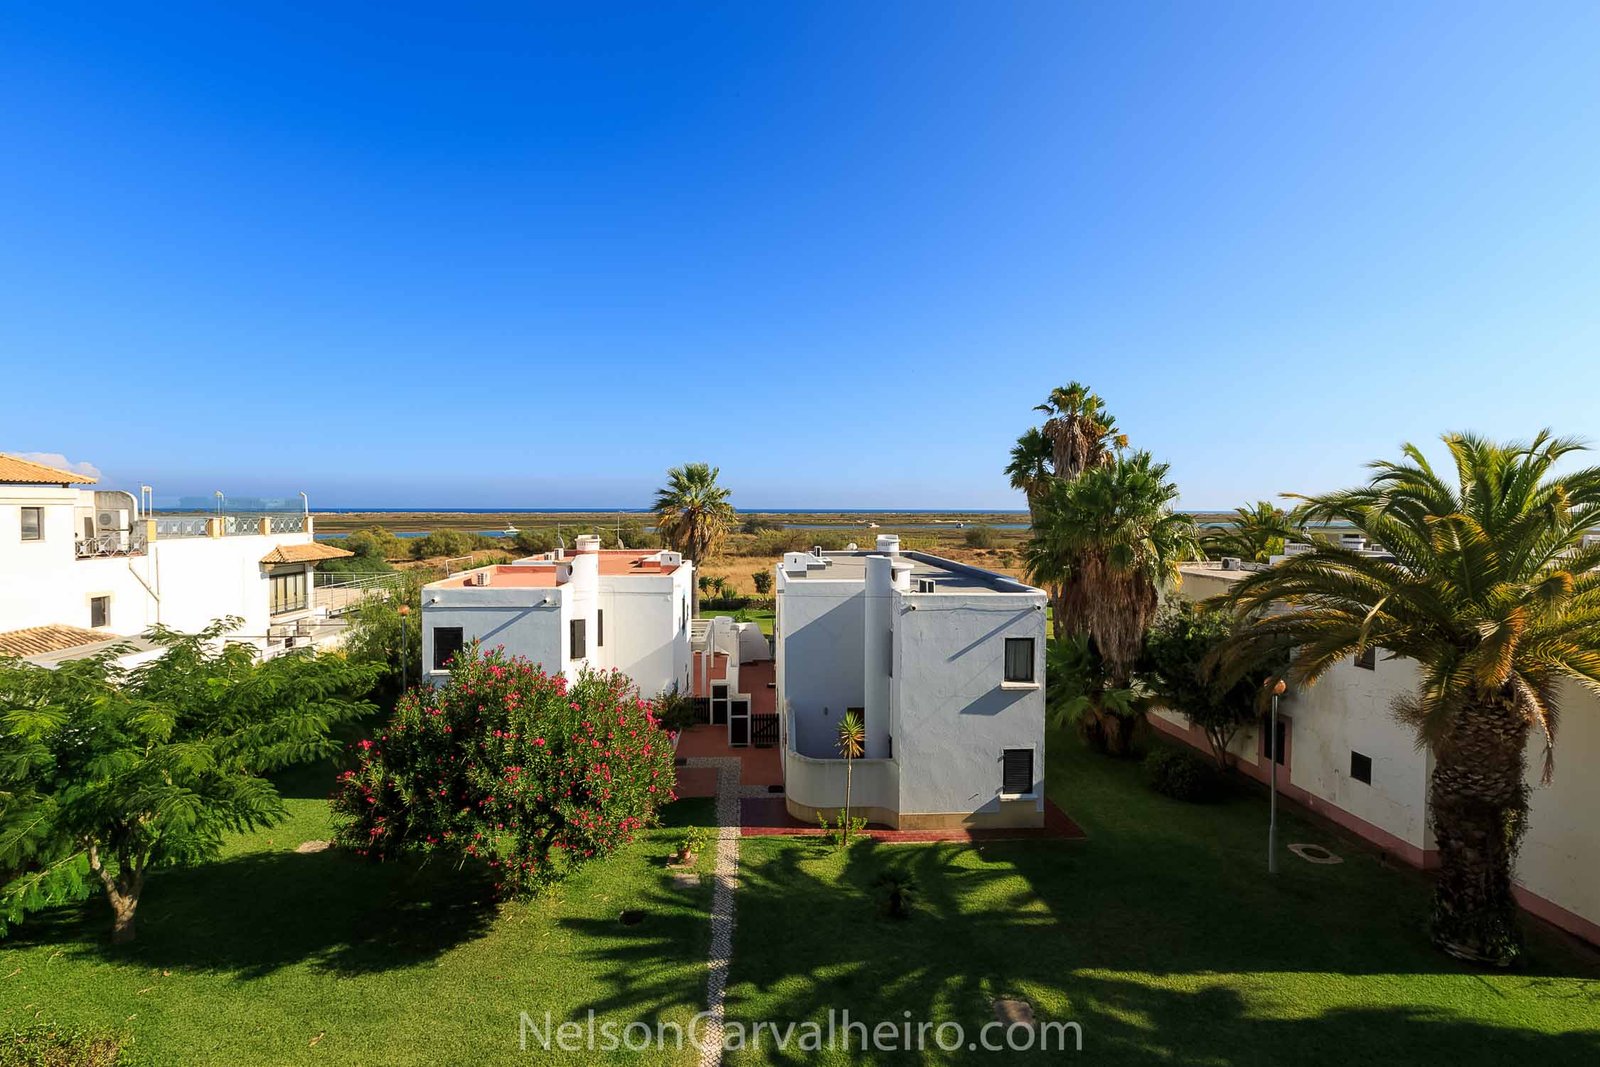 Nelson_Carvalheiro_Algarve_Flipkey_Guide (sea view from my apartment in Tavira)